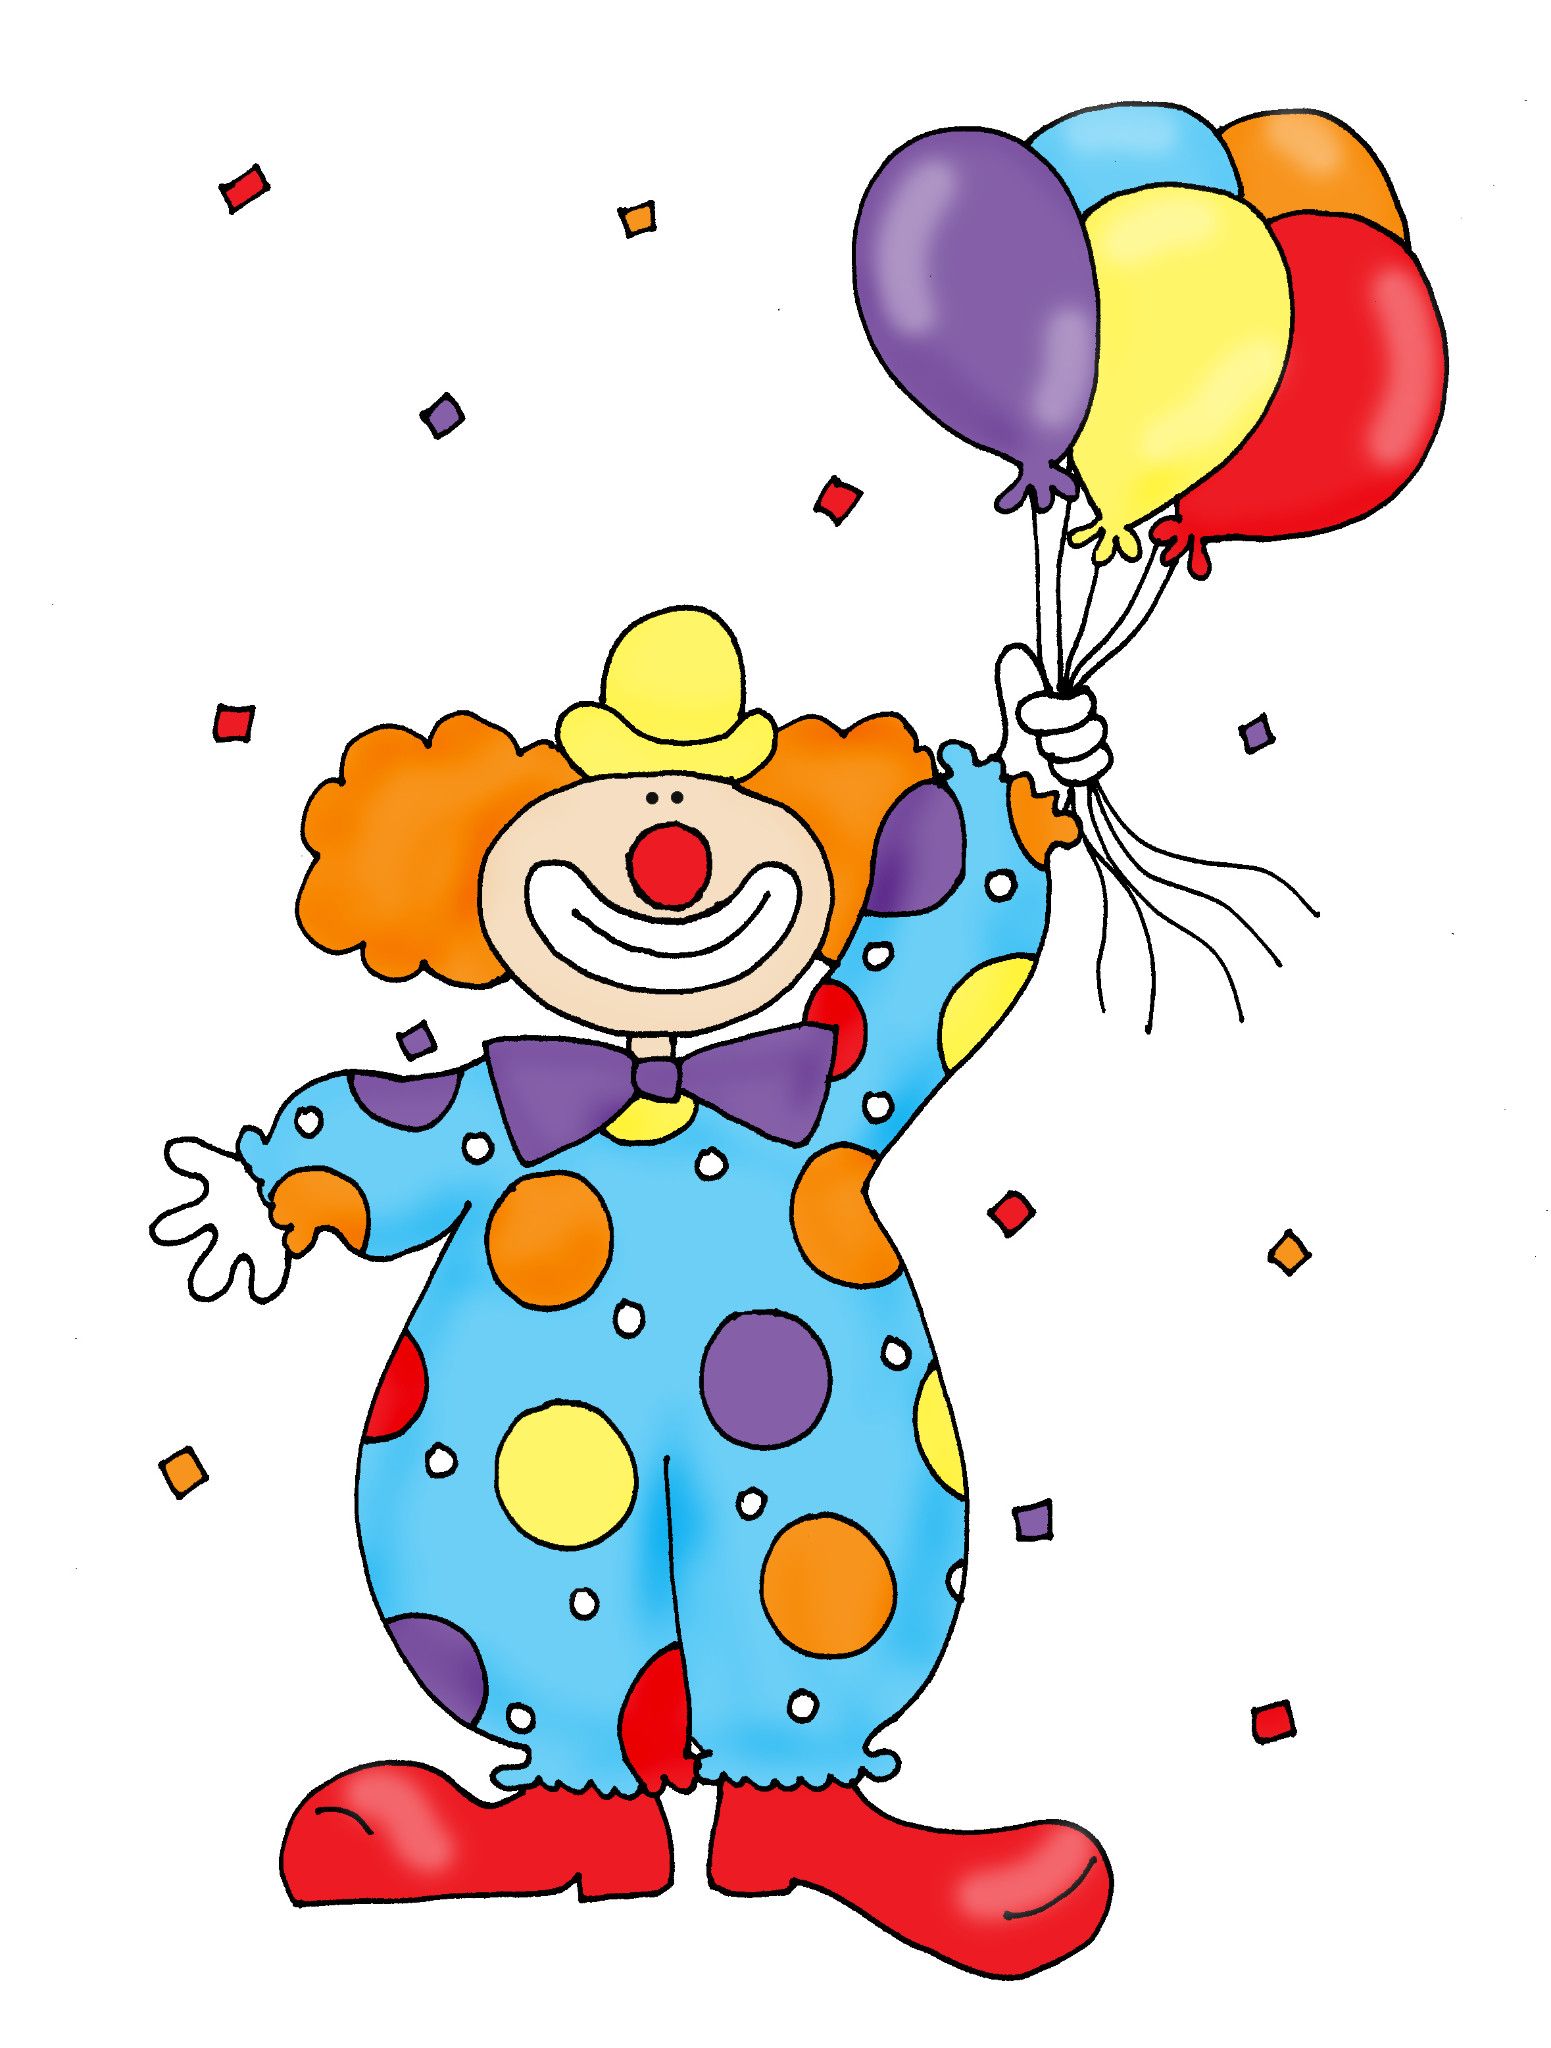 Free Happy Clown Image, Download Free Happy Clown Image png image, Free ClipArts on Clipart Library